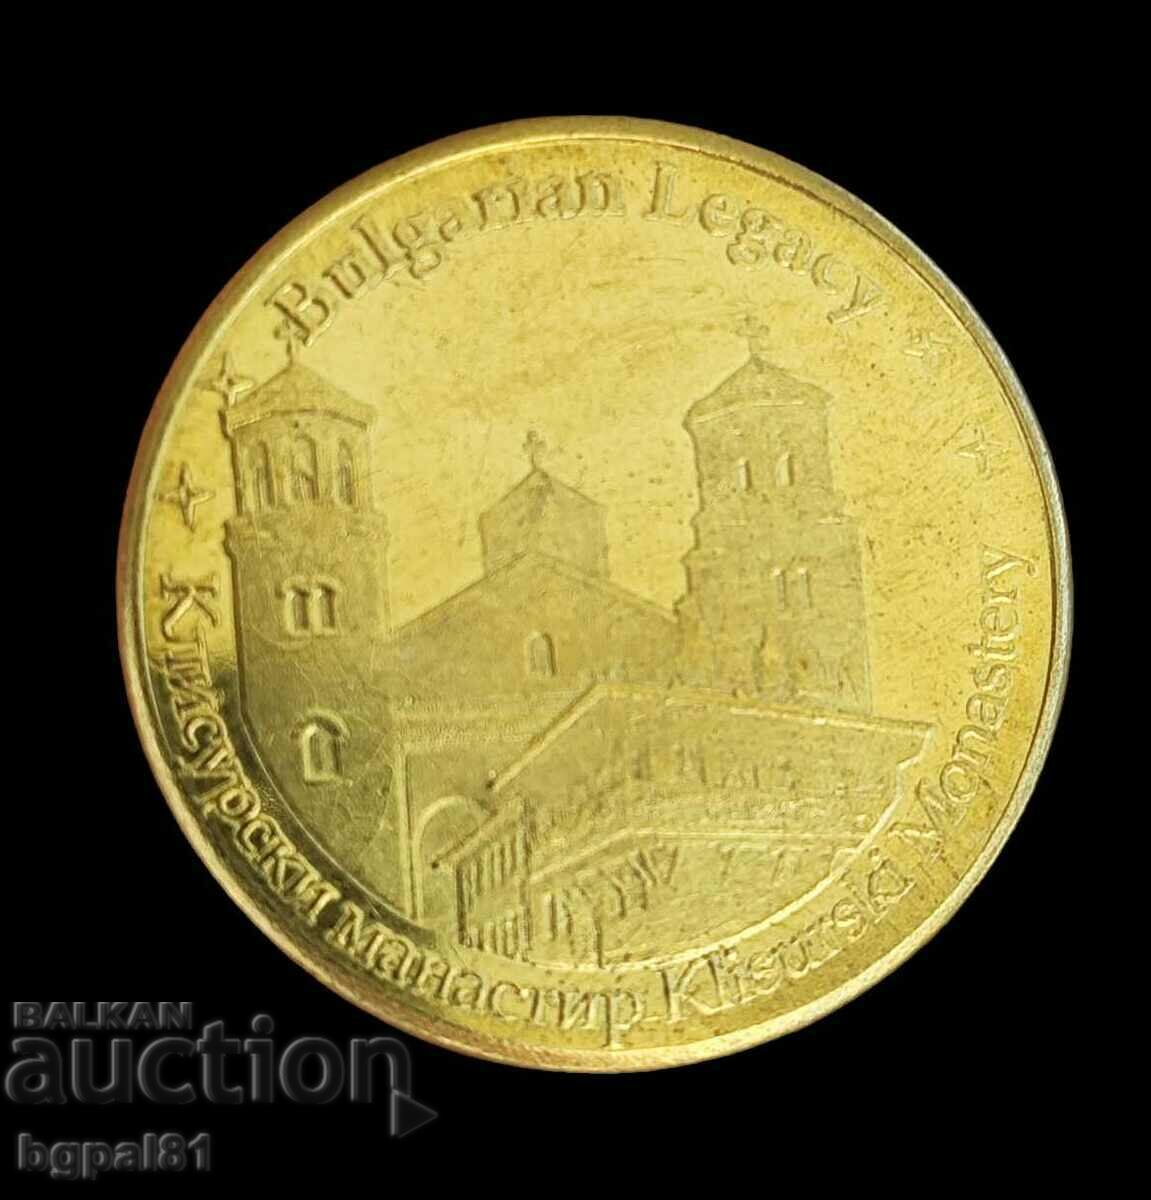 Klisur Monastery - "Bulgarian legacy" medal issue